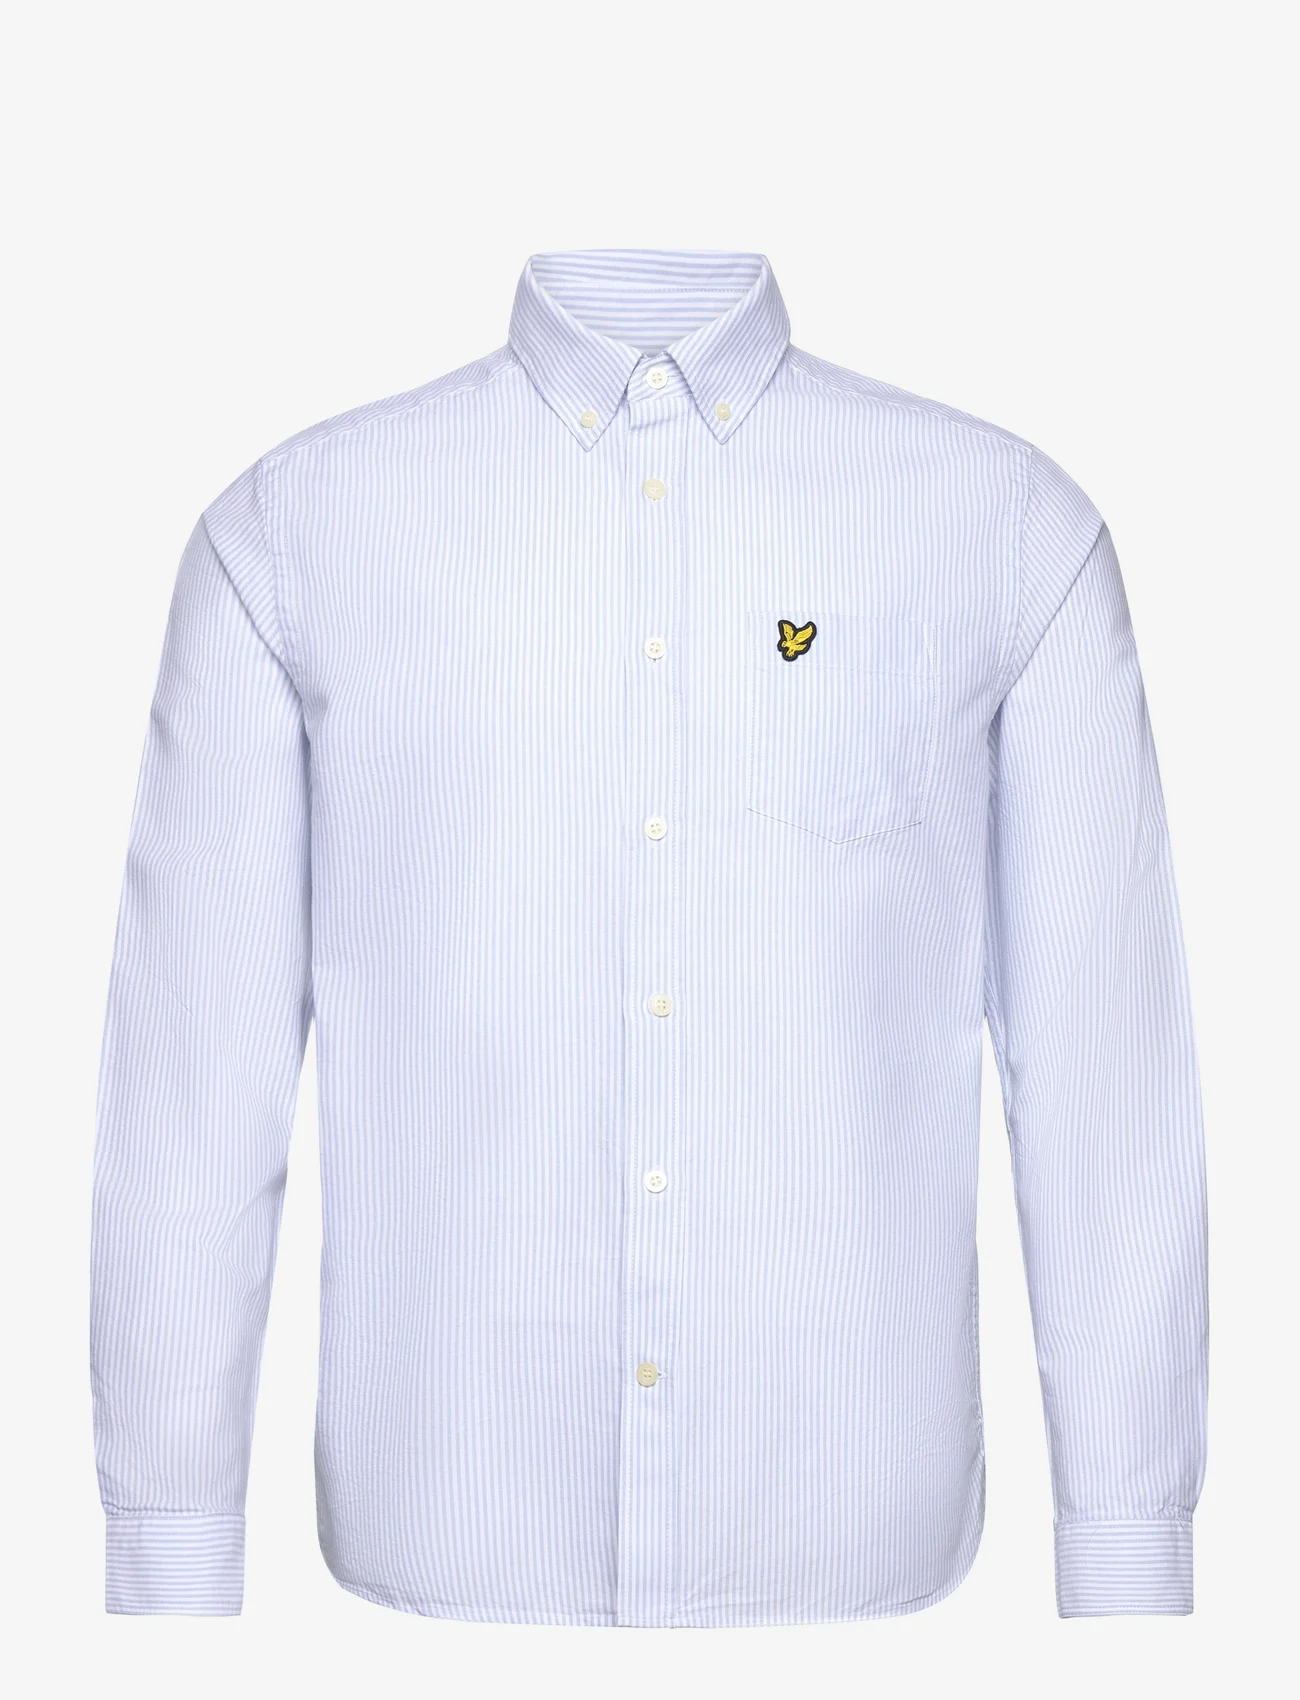 Lyle & Scott - Stripe Oxford Shirt - oxford skjorter - w490 light blue/ white - 0